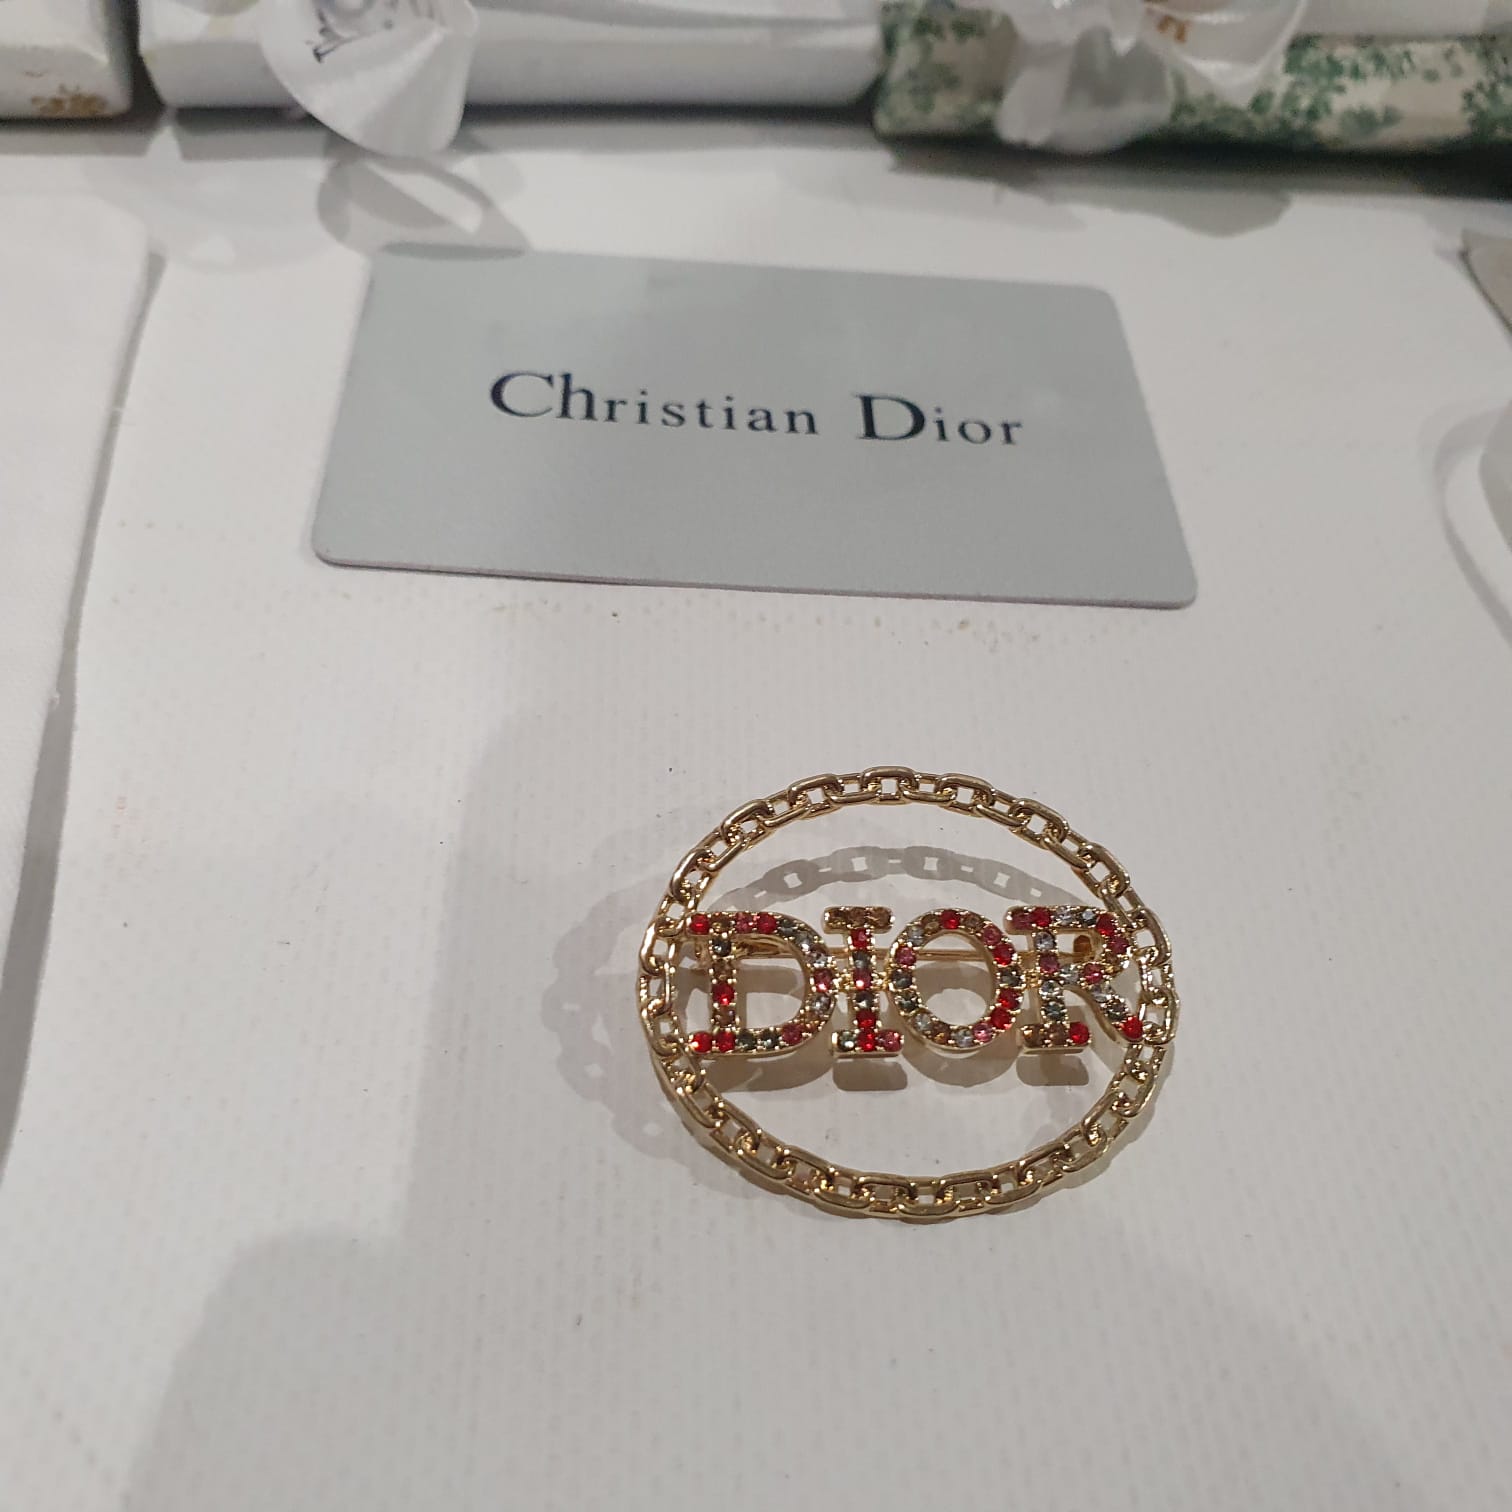 Christian Dior Brooch